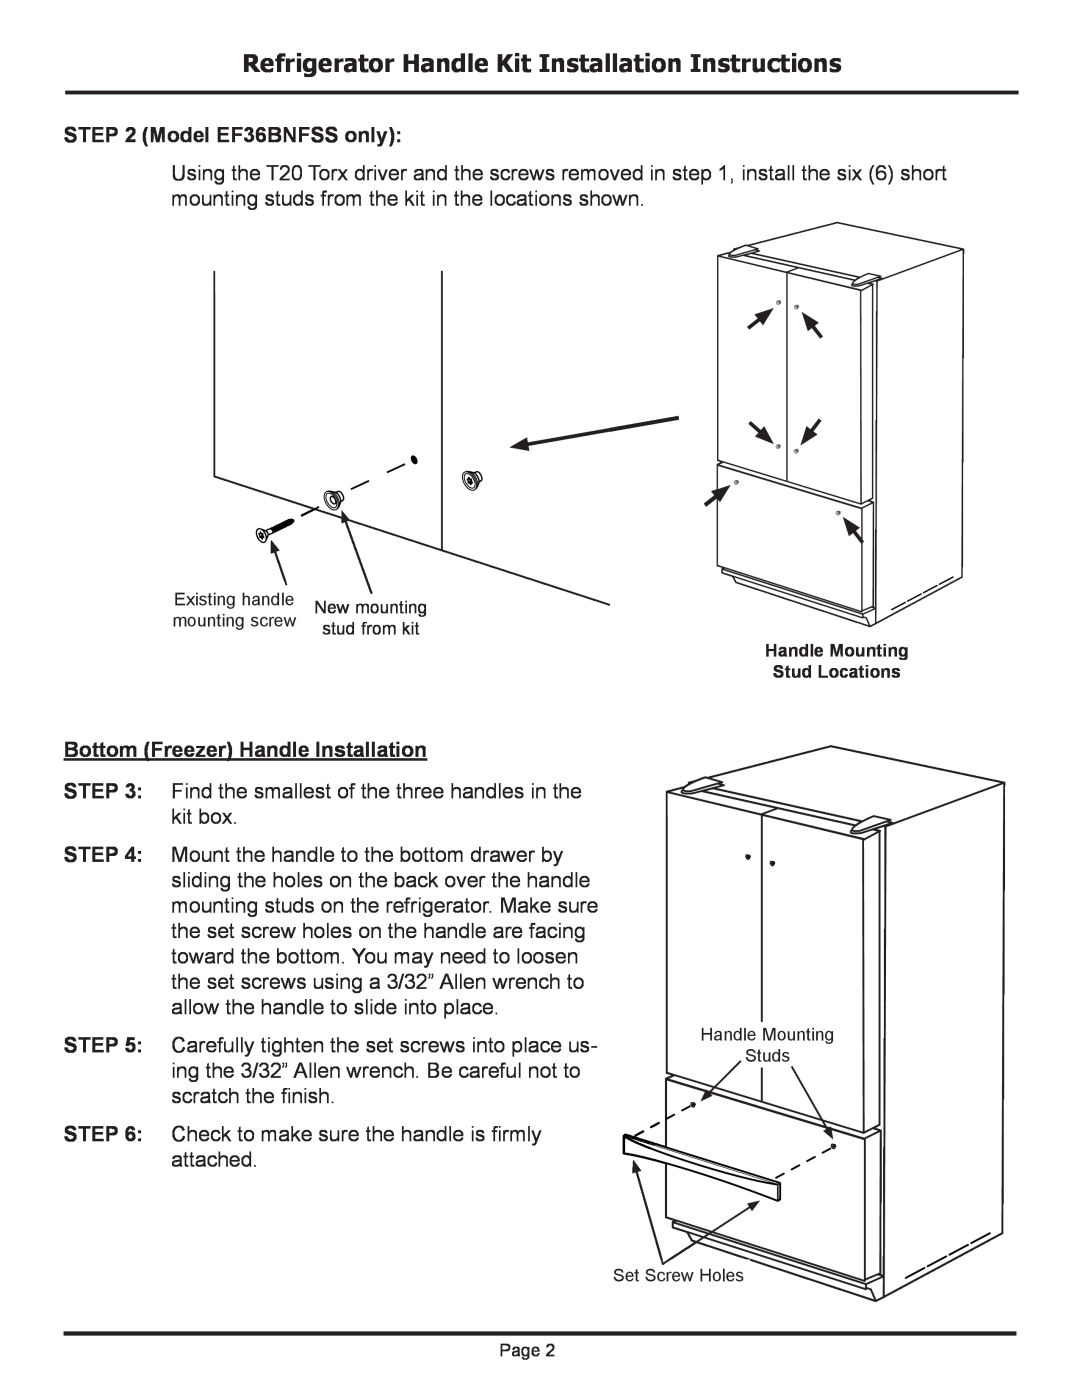 Dacor Refrigerator Handle Kit Installation Instructions, Model EF36BNFSS only, Bottom Freezer Handle Installation 